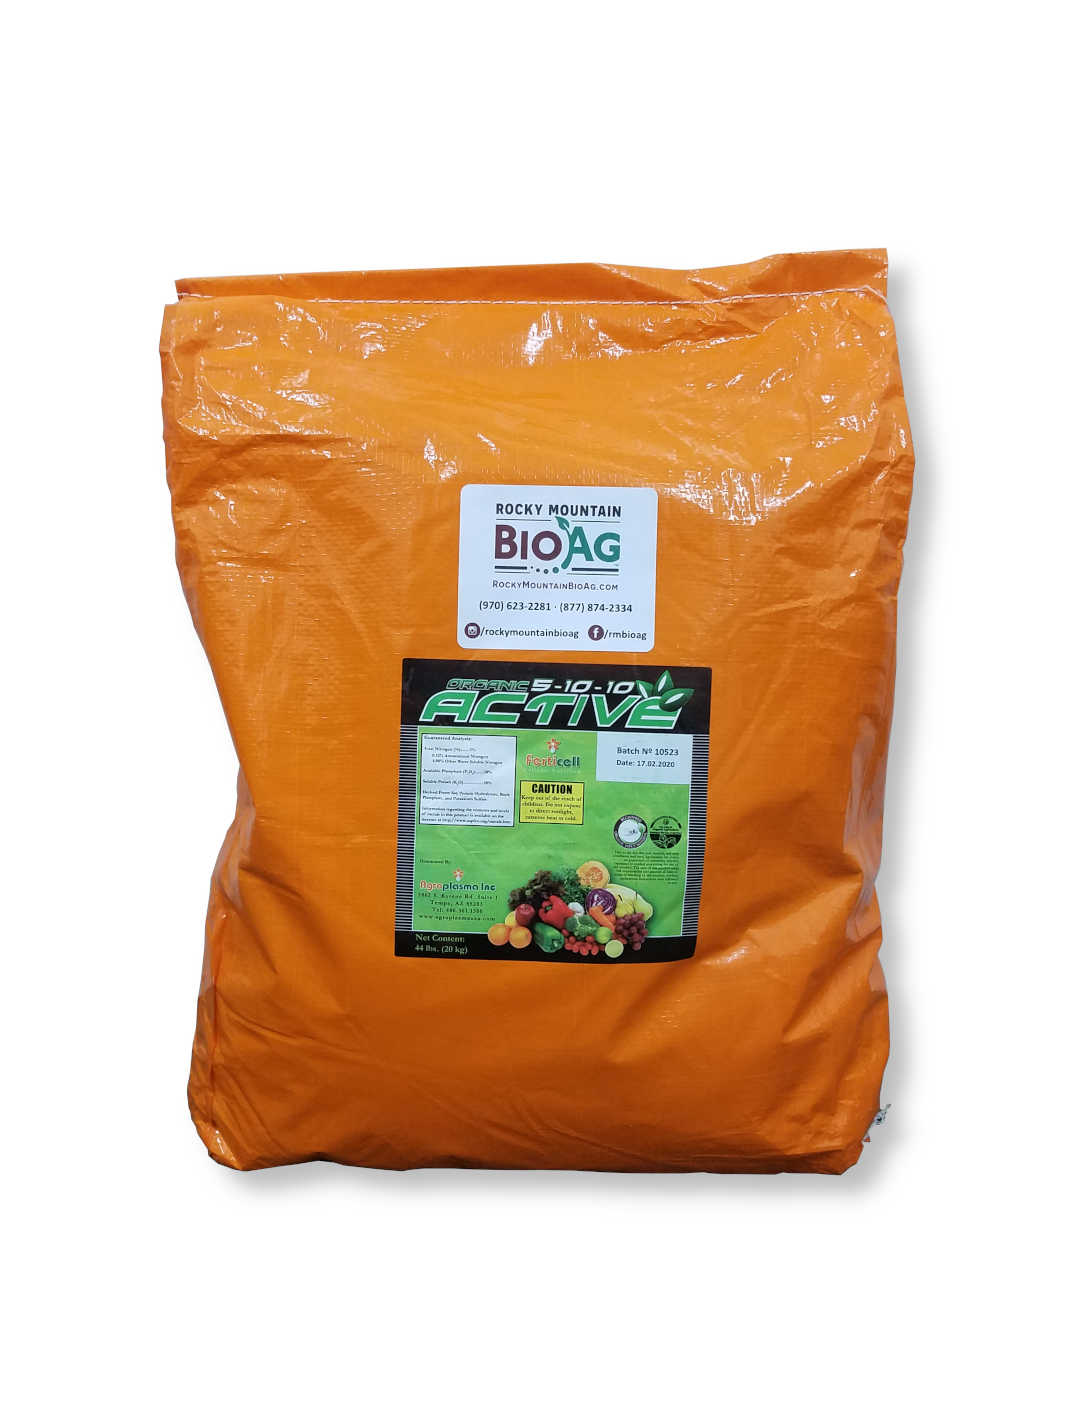 Active 5-10-10 soluble organic fertilizer in 44lb bag